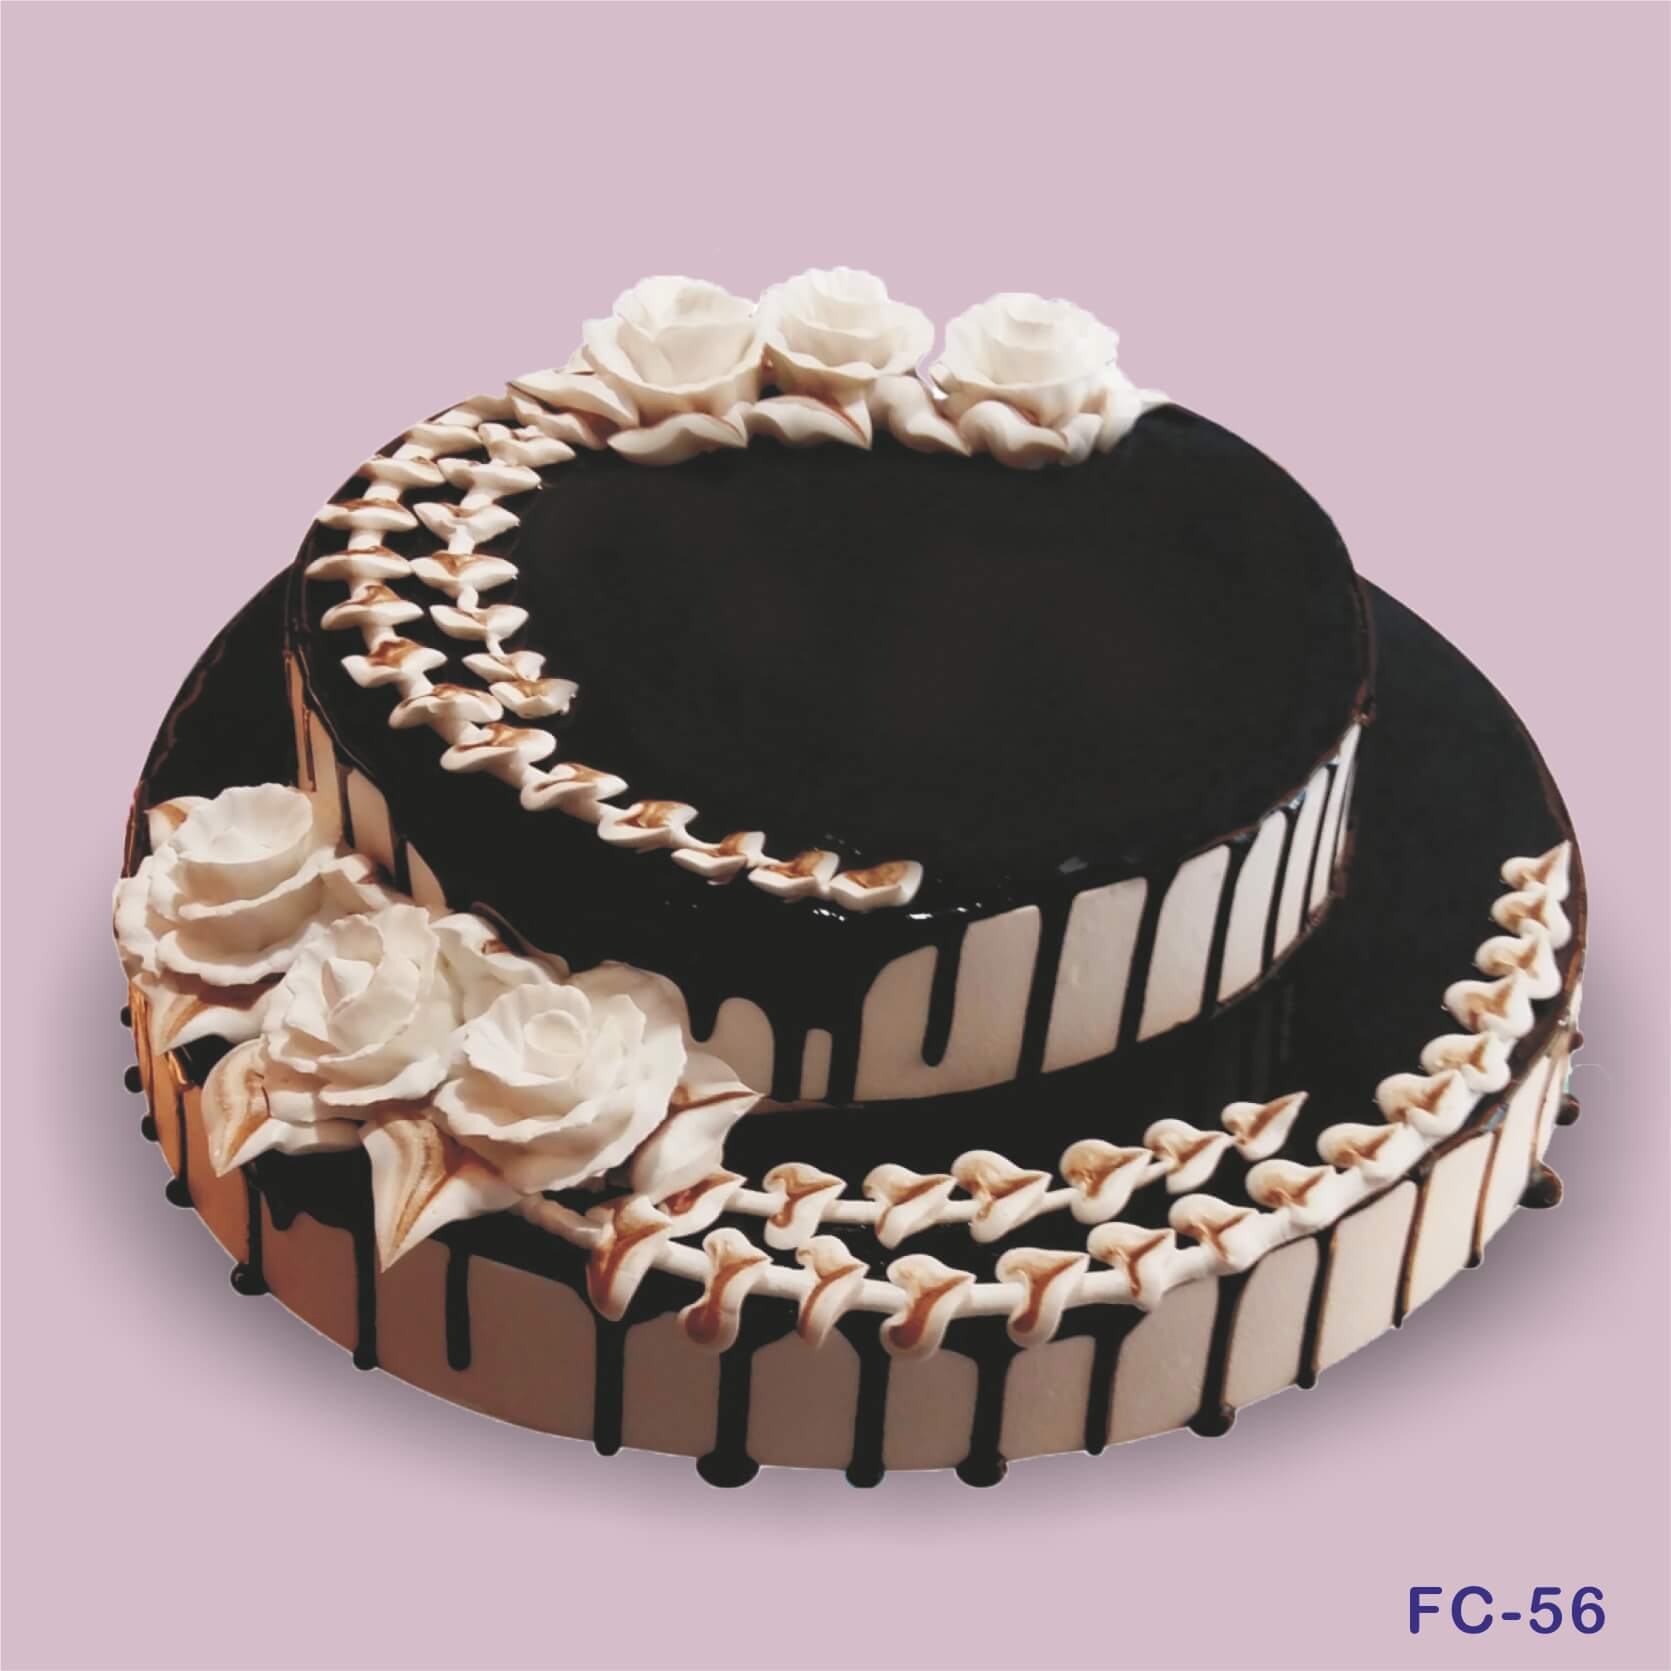 Double Chocolate Fancy Cake